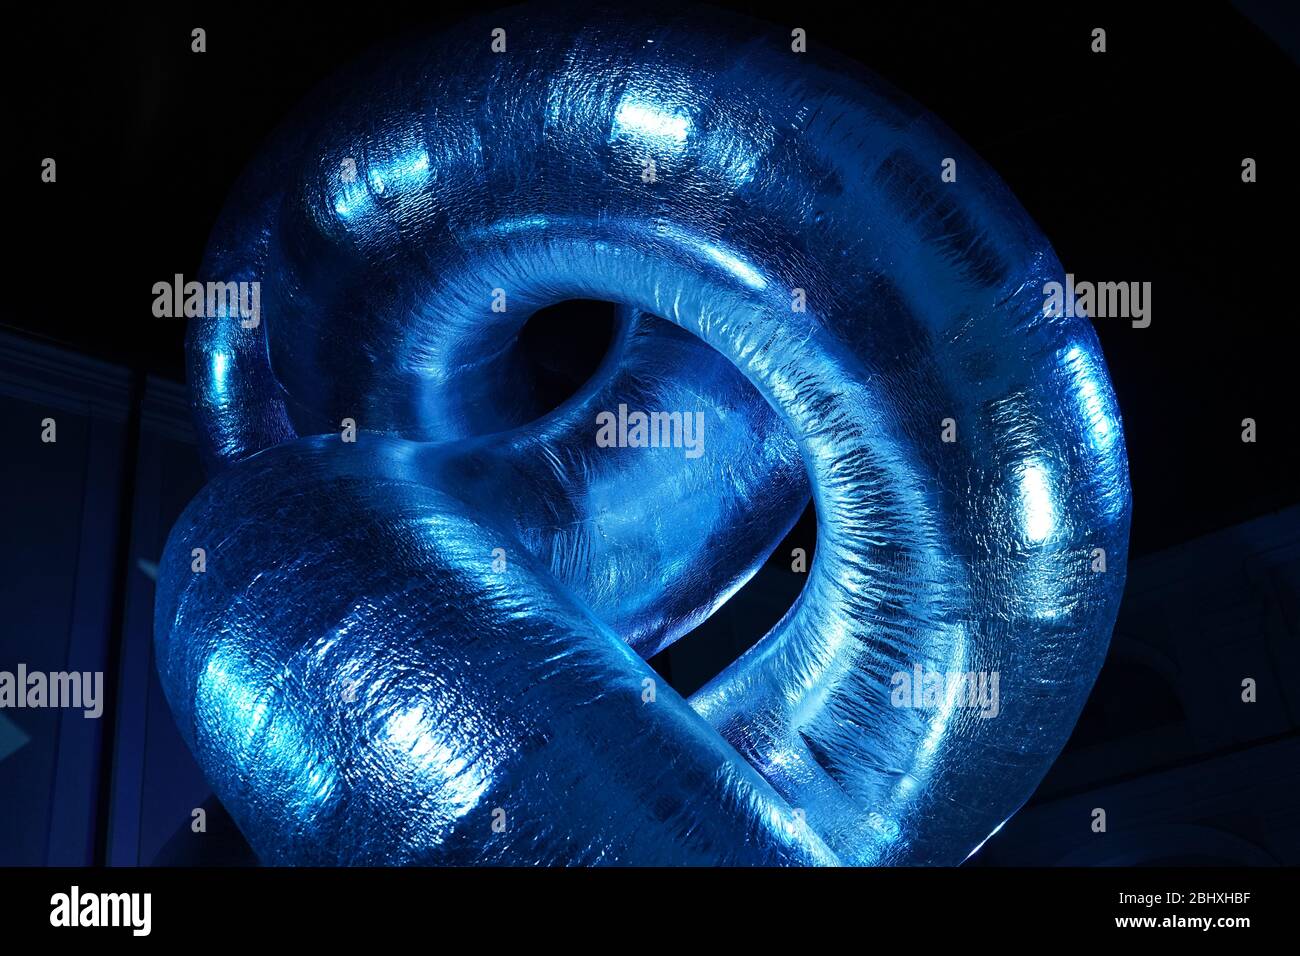 Strange shape sculpture illuminated by blue light Stock Photo